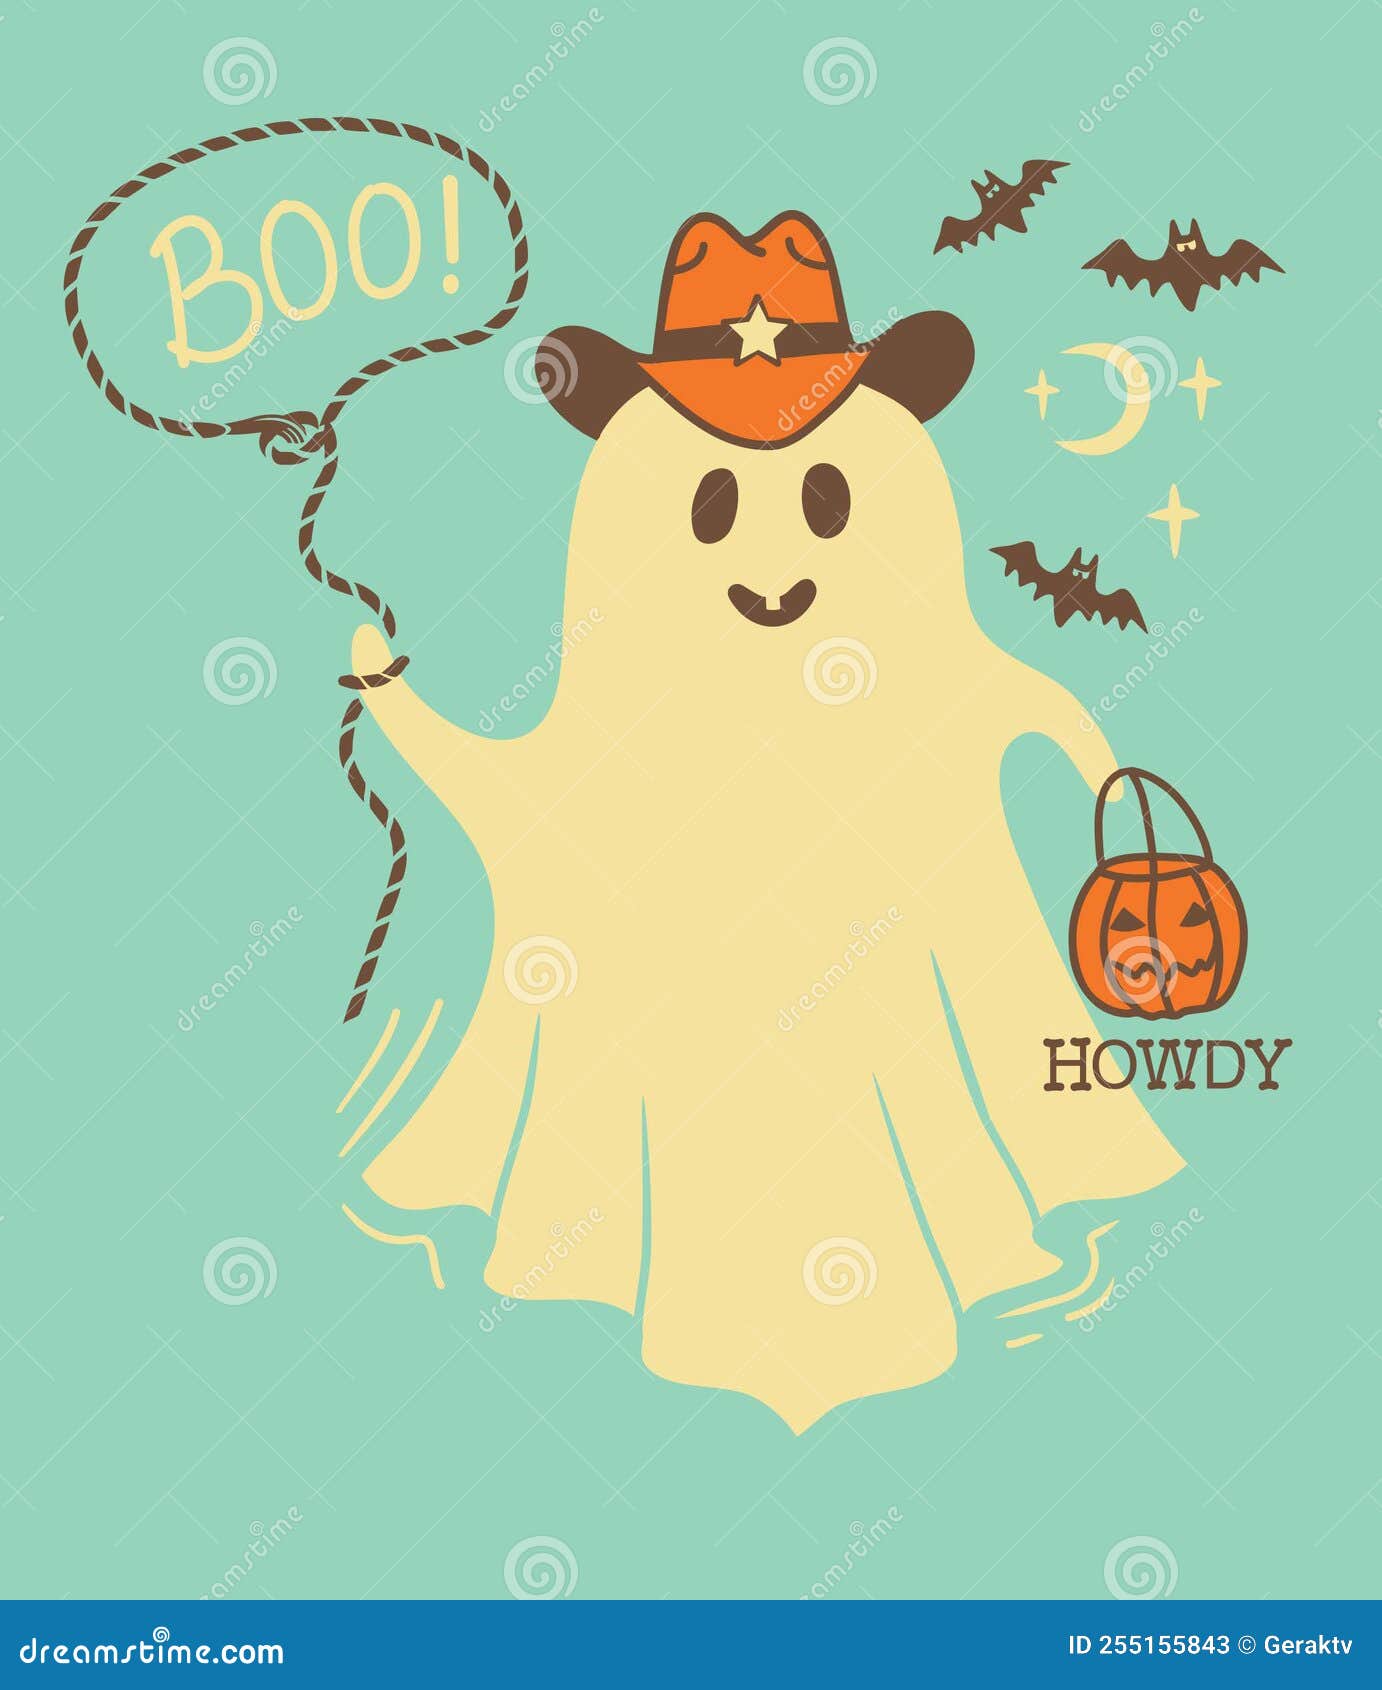 cartaz de halloween vector wiih cute boo, ilustração vetorial de